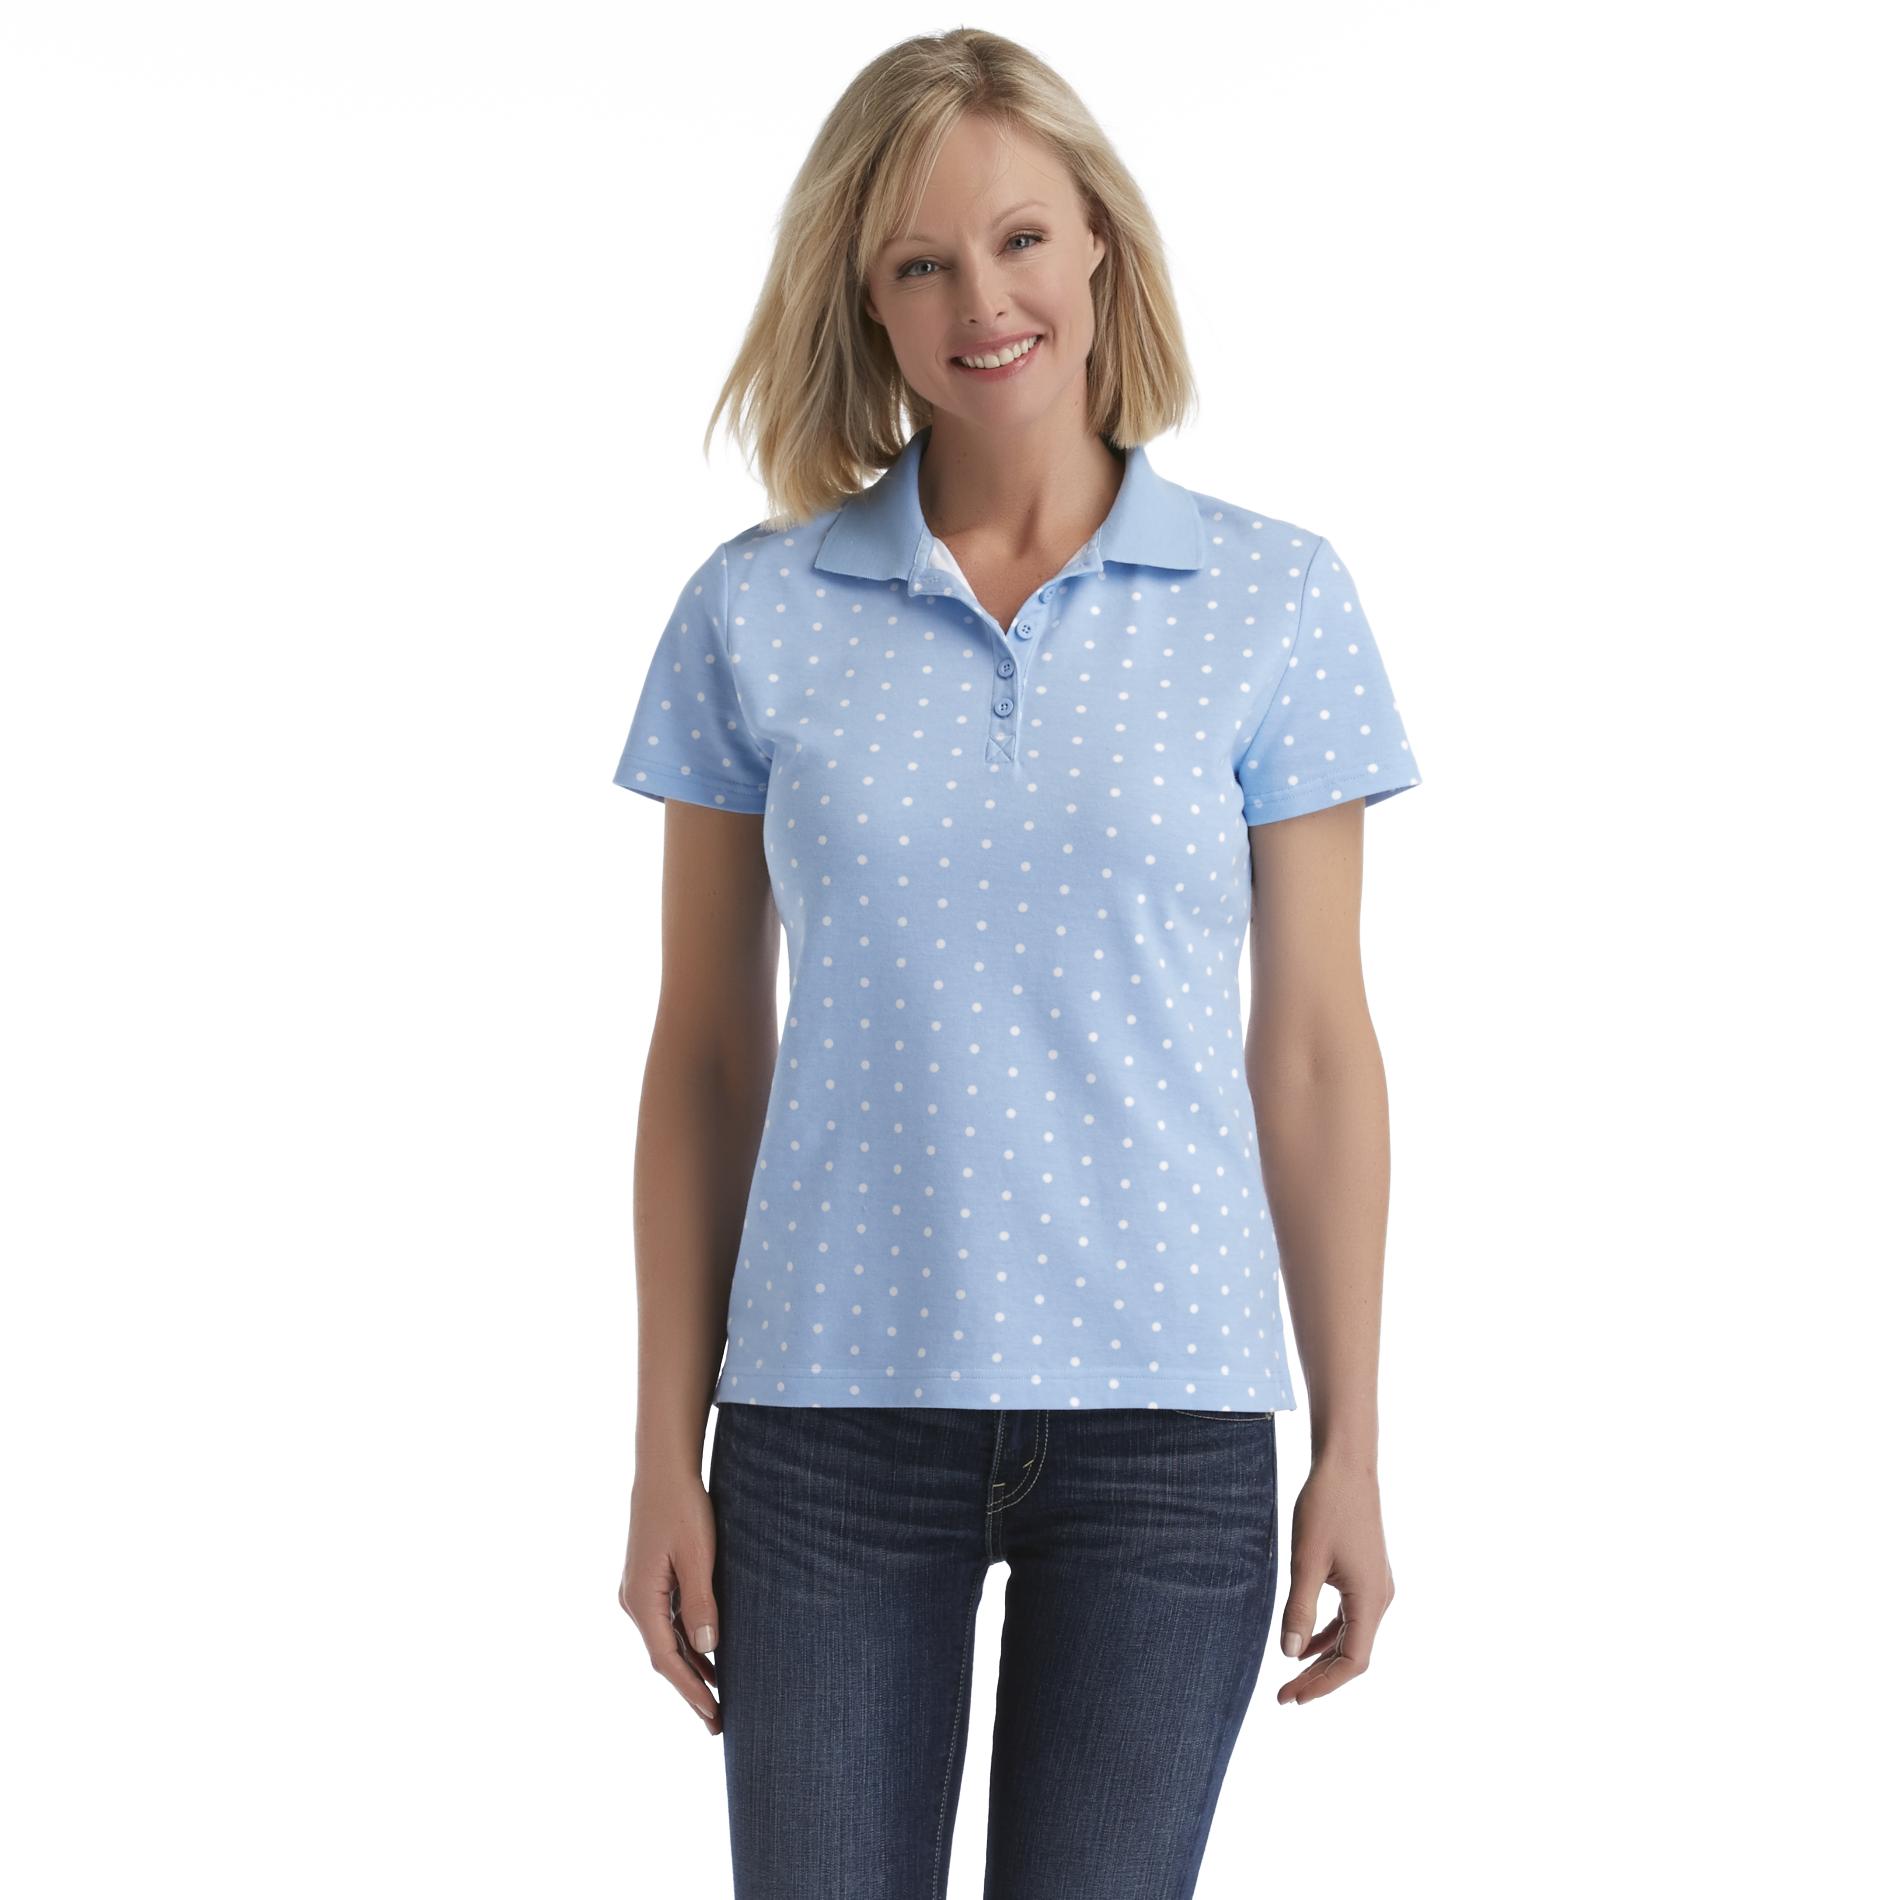 Basic Editions Women's Polo Shirt - Dots